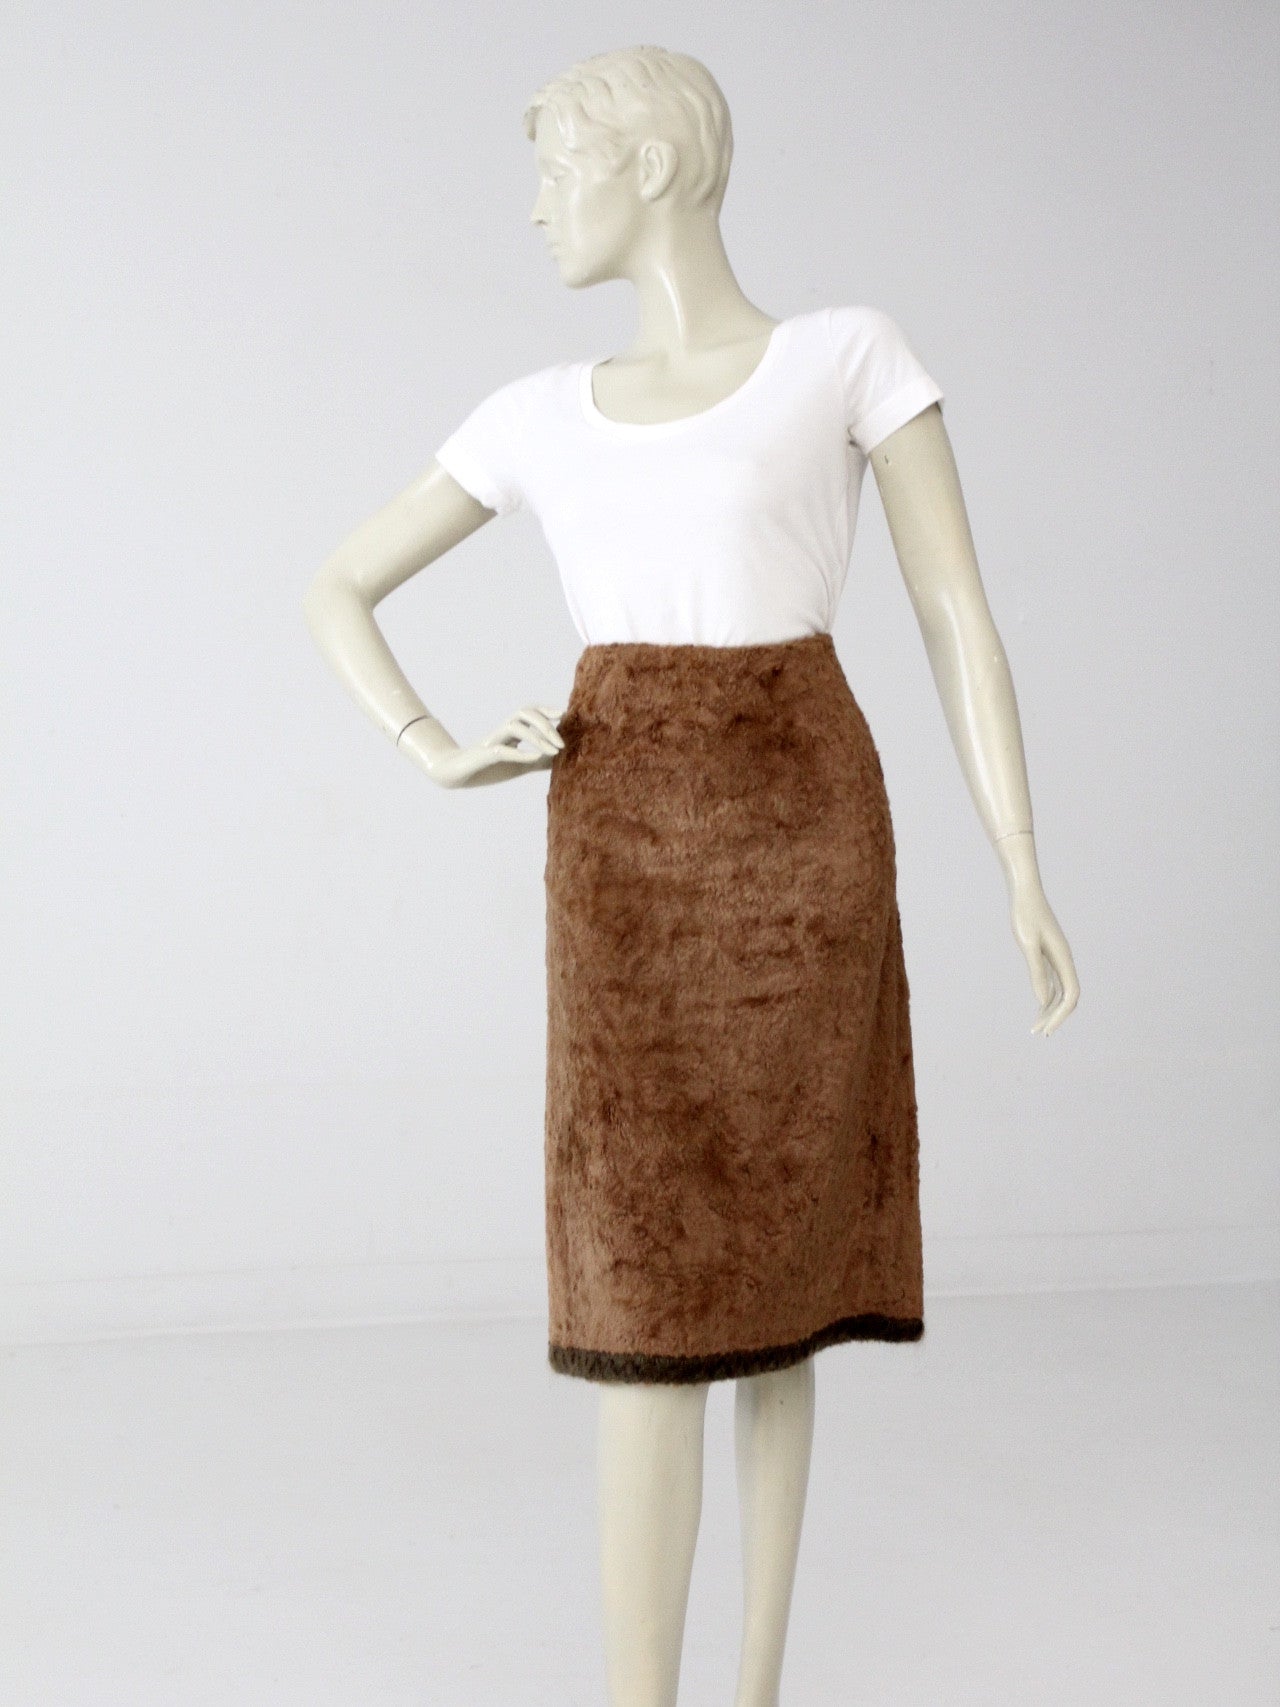 vintage faux fur skirt